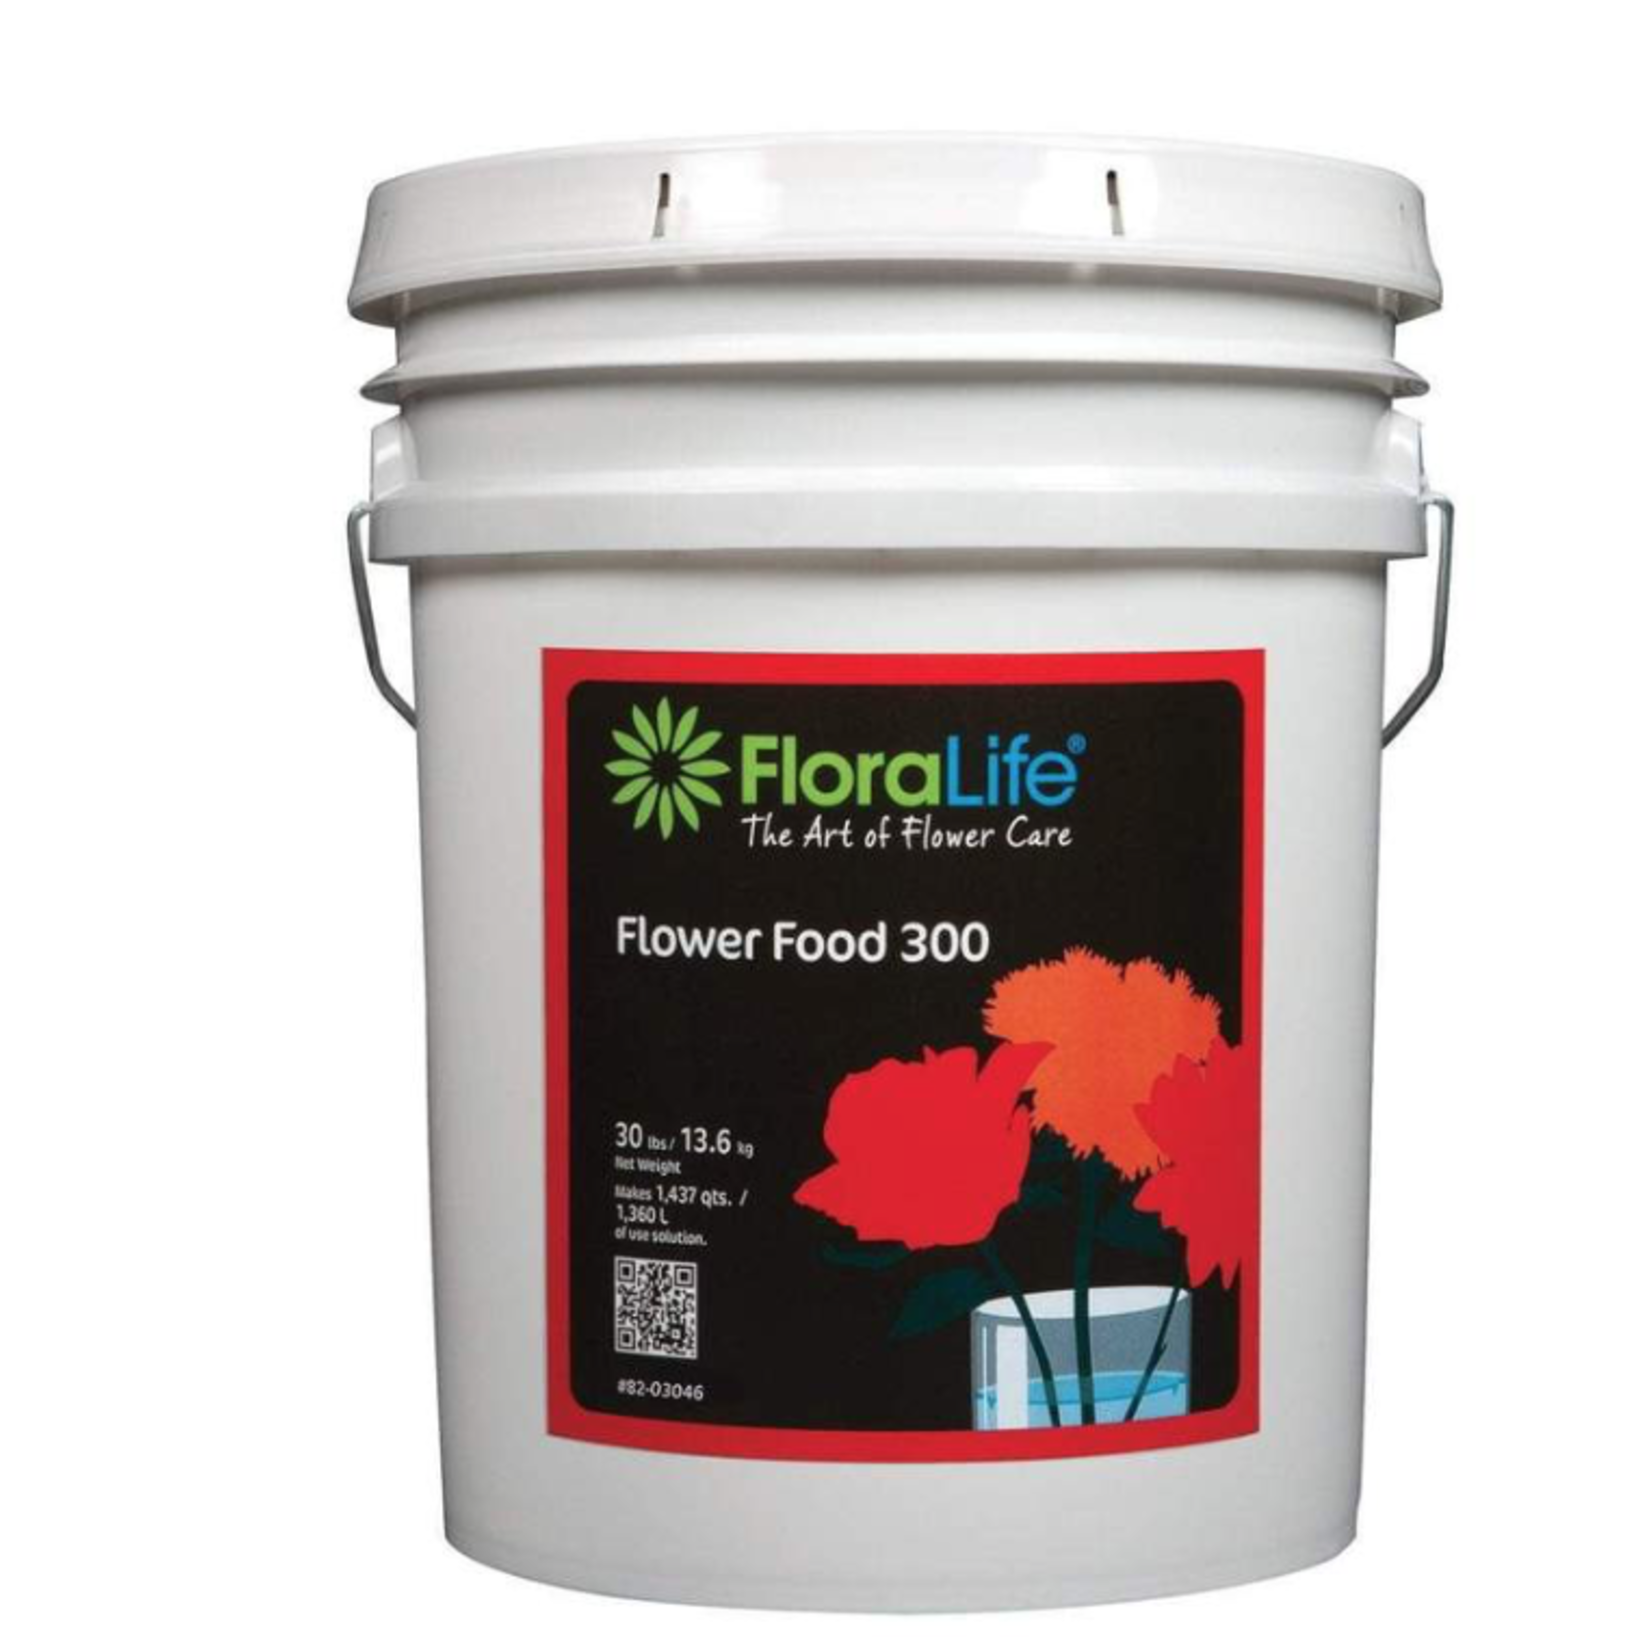 FLORALIFE 300, 30 LBS CRYSTAL CLEAR POWDER FLOWERS FOOD